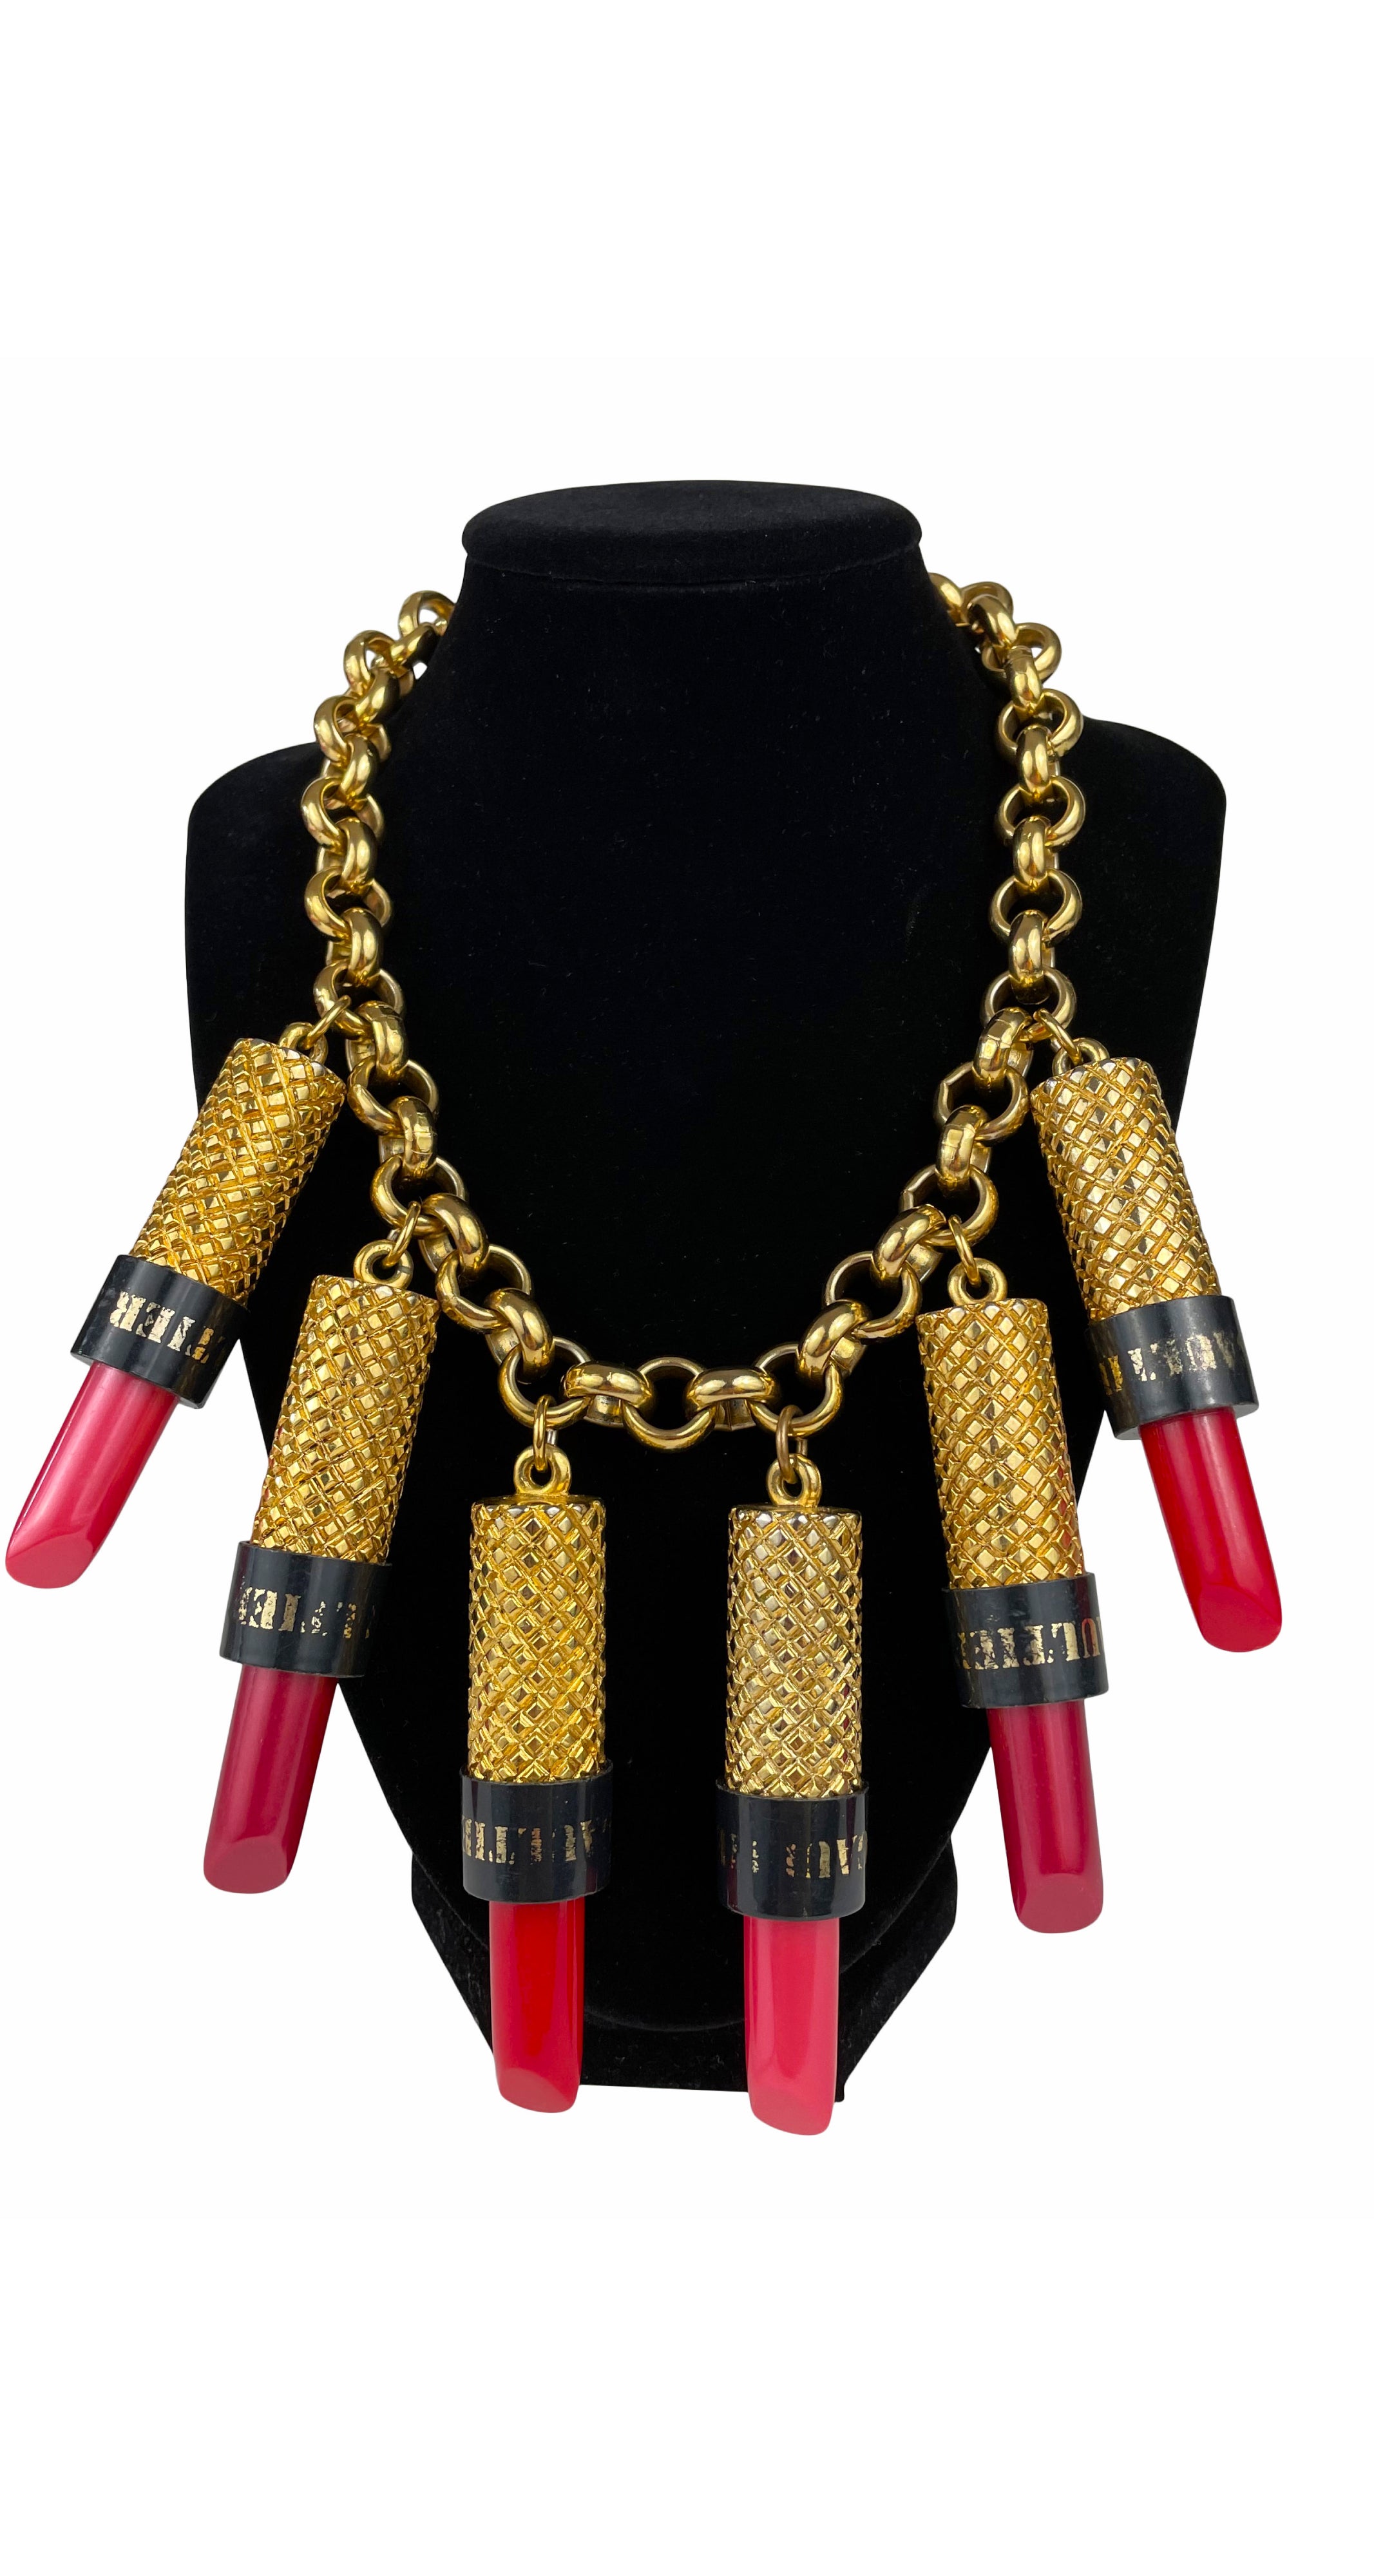 Jean-Paul Gaultier 1980s Lipstick Charm Gold-Tone Necklace